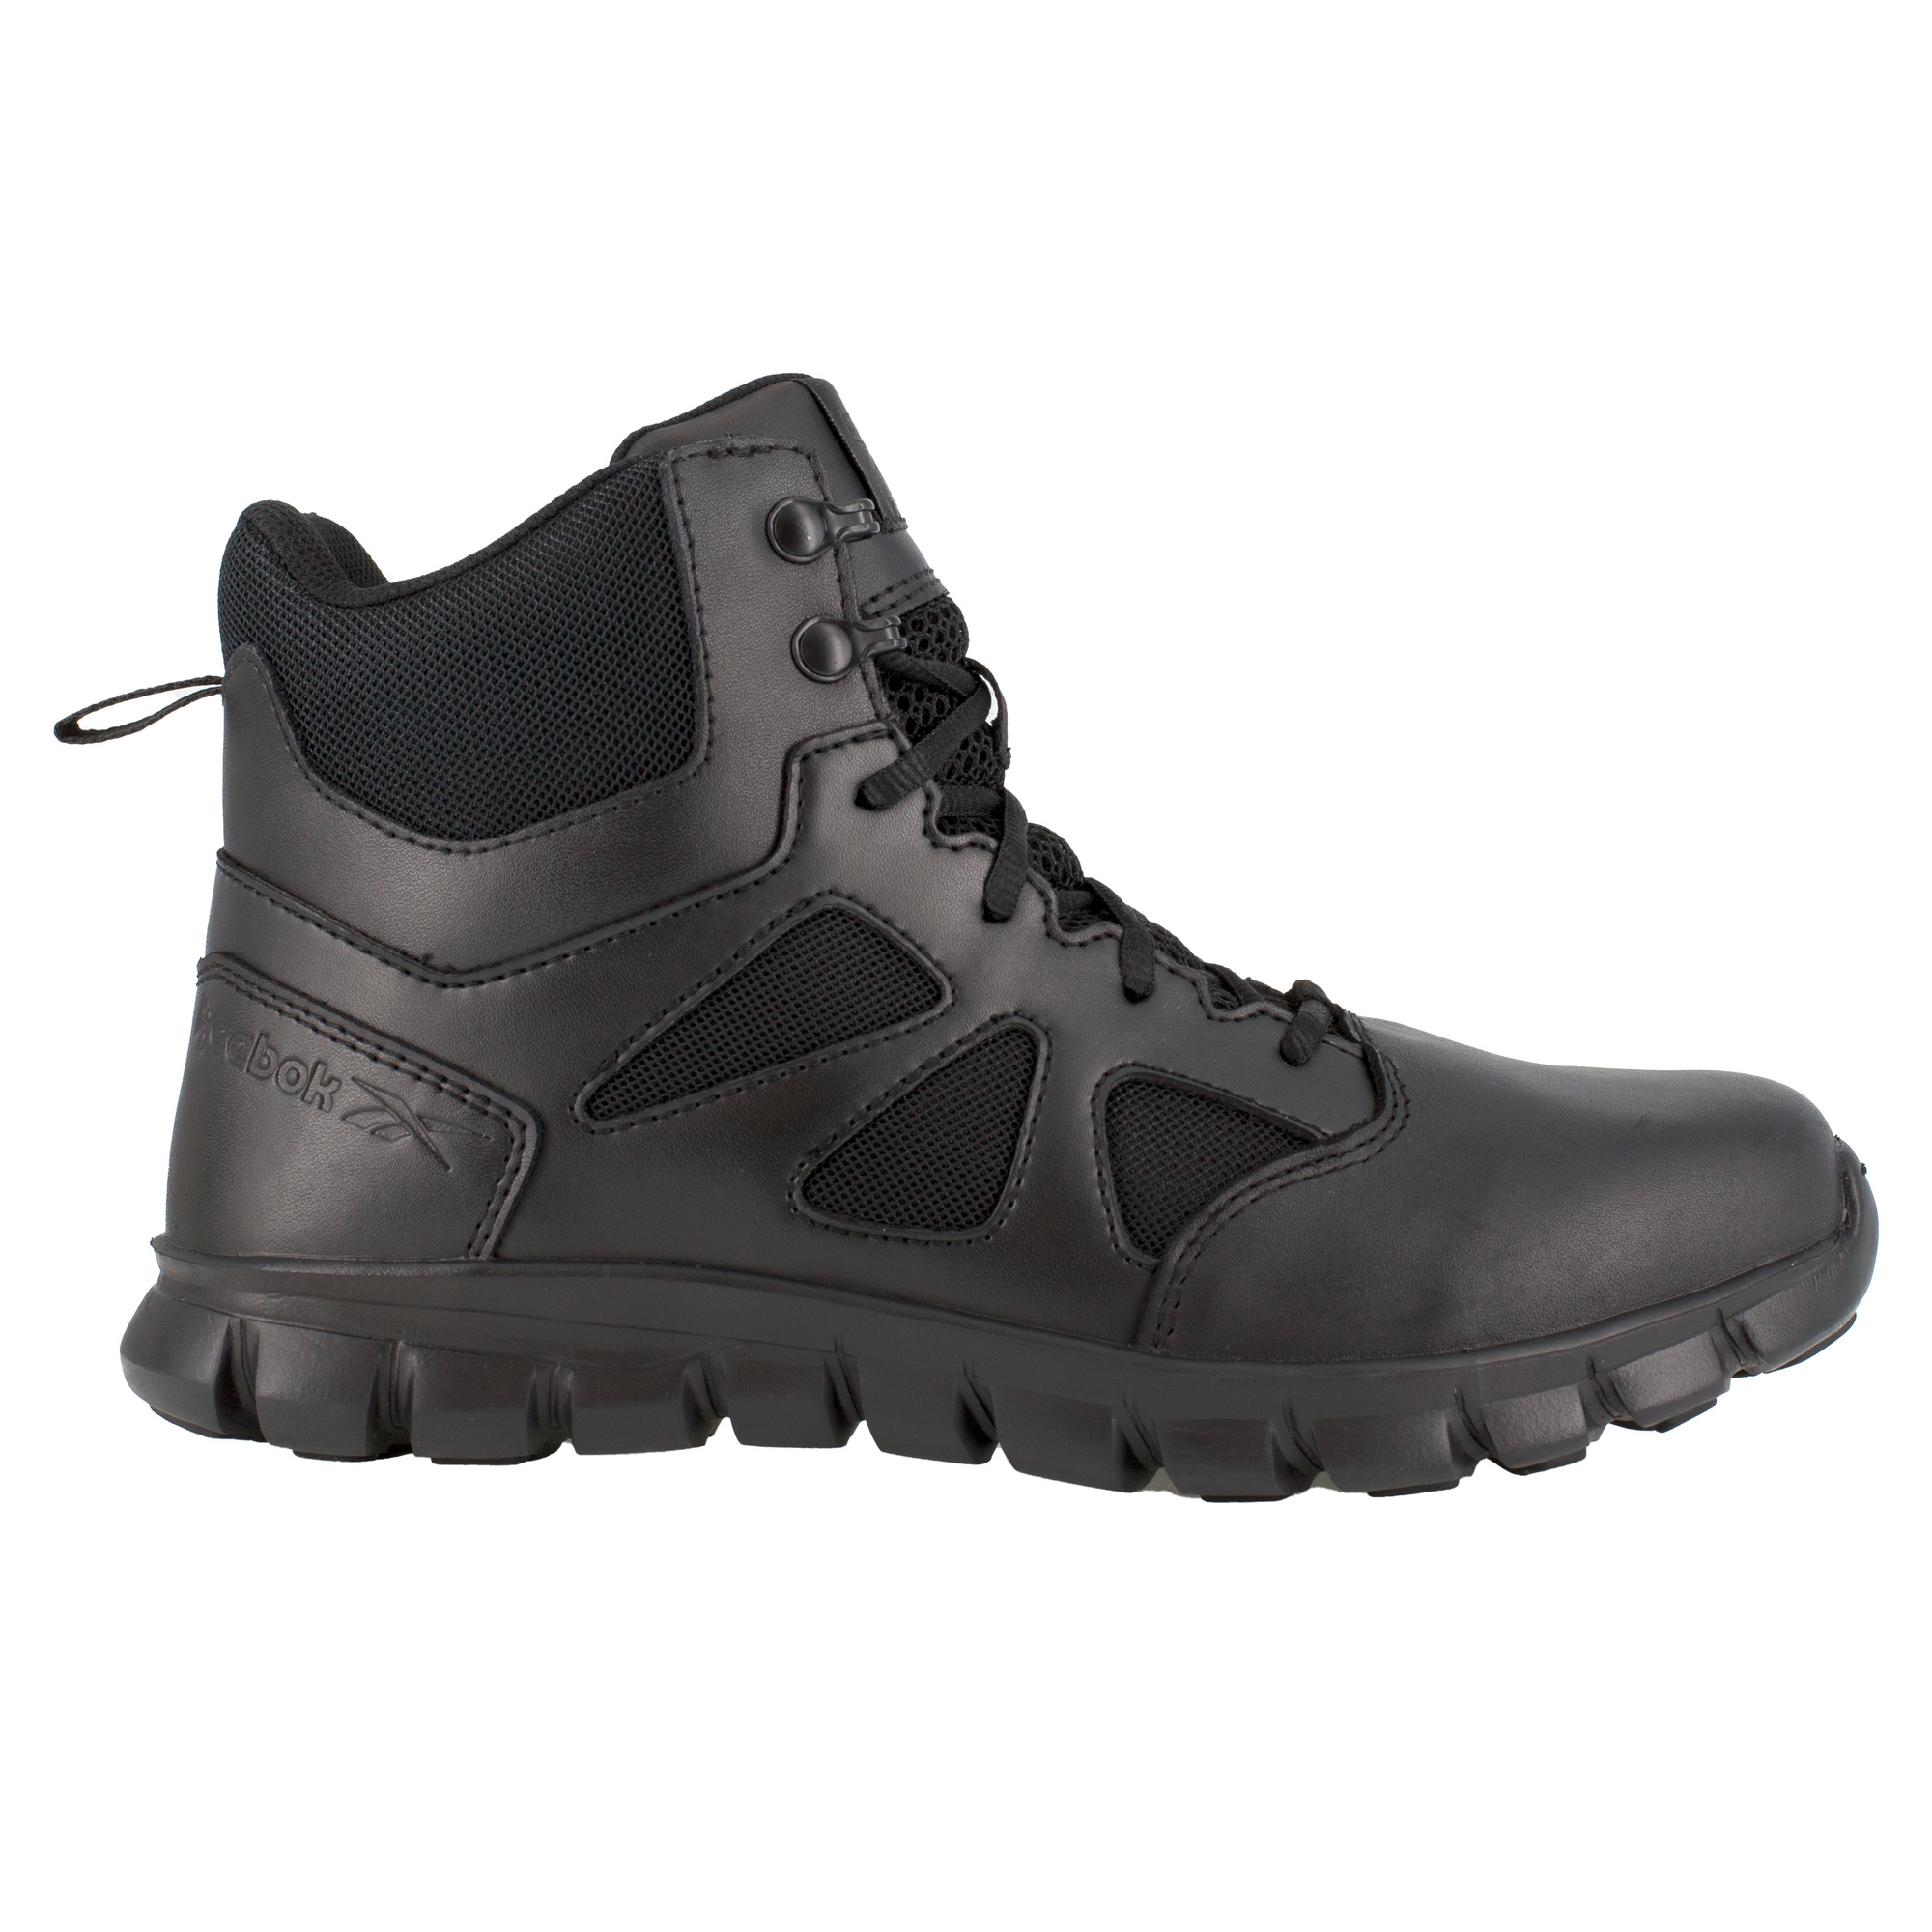 Reebok, 6Inch Tactical Boot w/Side Zipper, Size 6 1/2, Width Wide, Color Black, Model RB086